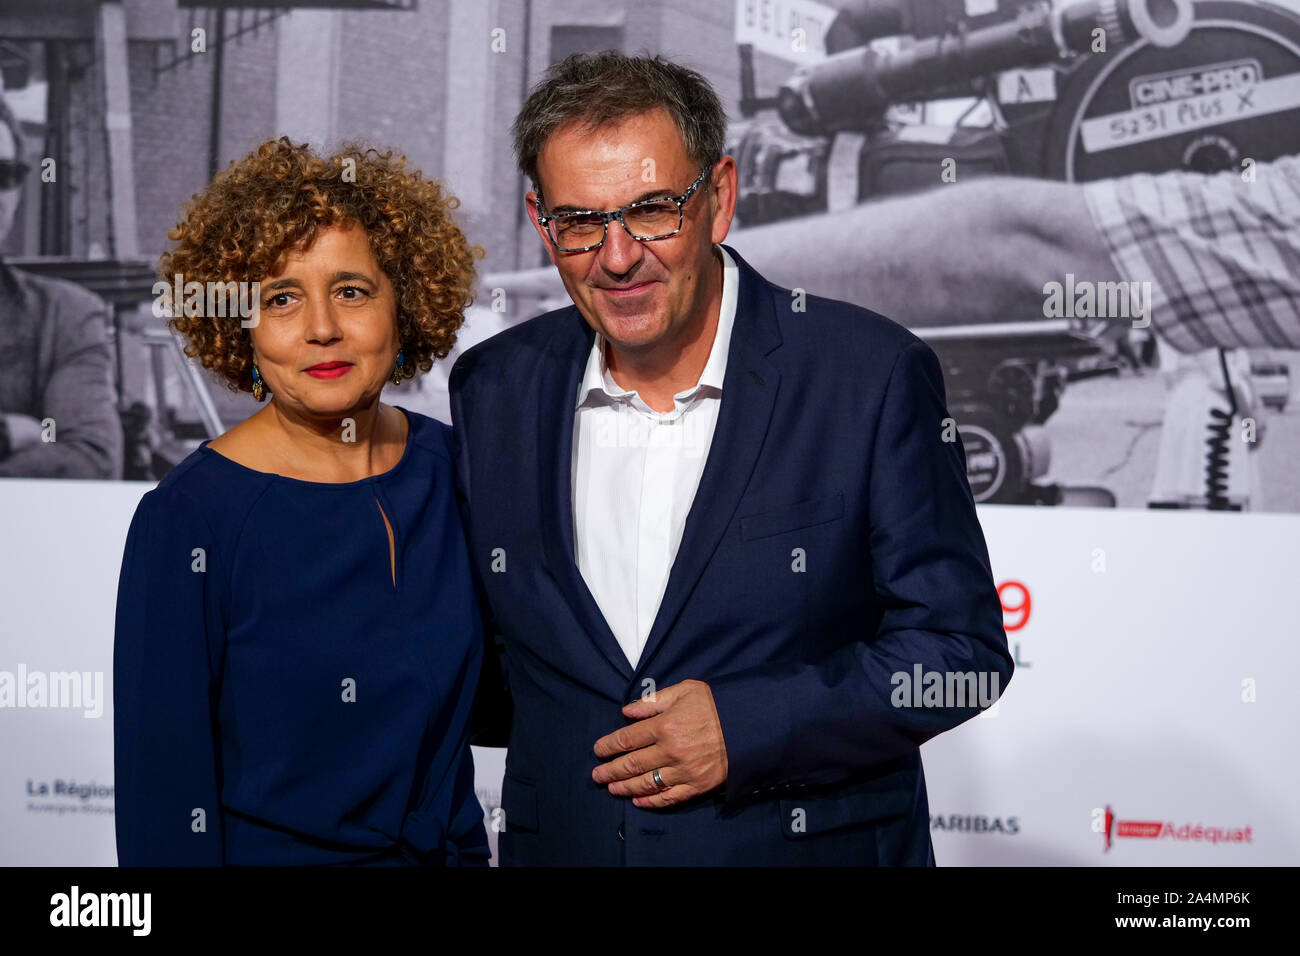 Laila Kalai-Kimelfeld and David Kimelfeld attend 11th Lumiere Film Festival, Lyon, France Stock Photo